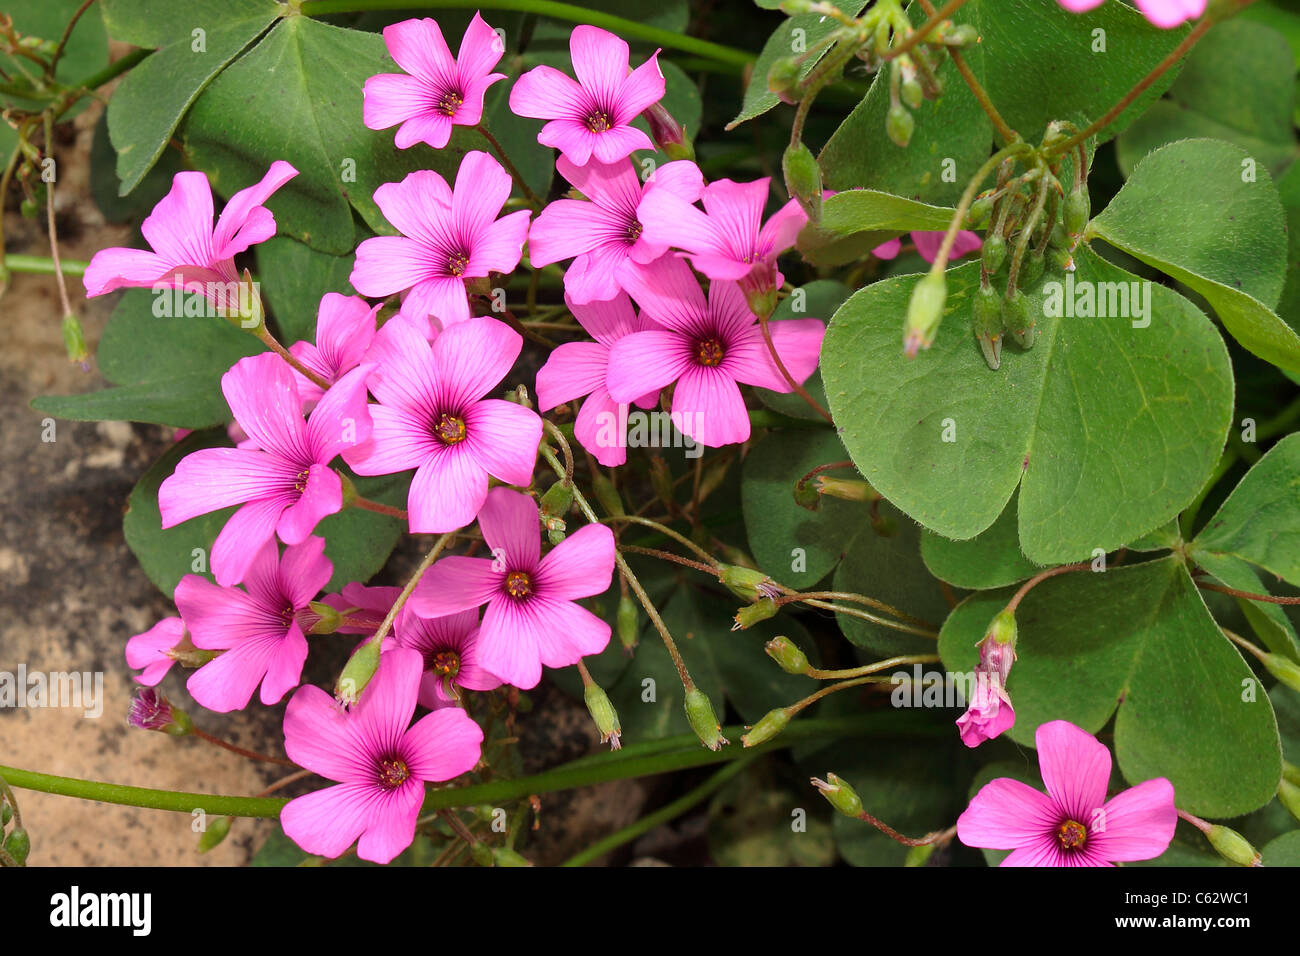 Pink Woodsorrel oxalis debilis corymbosa in Flower Stock Photo